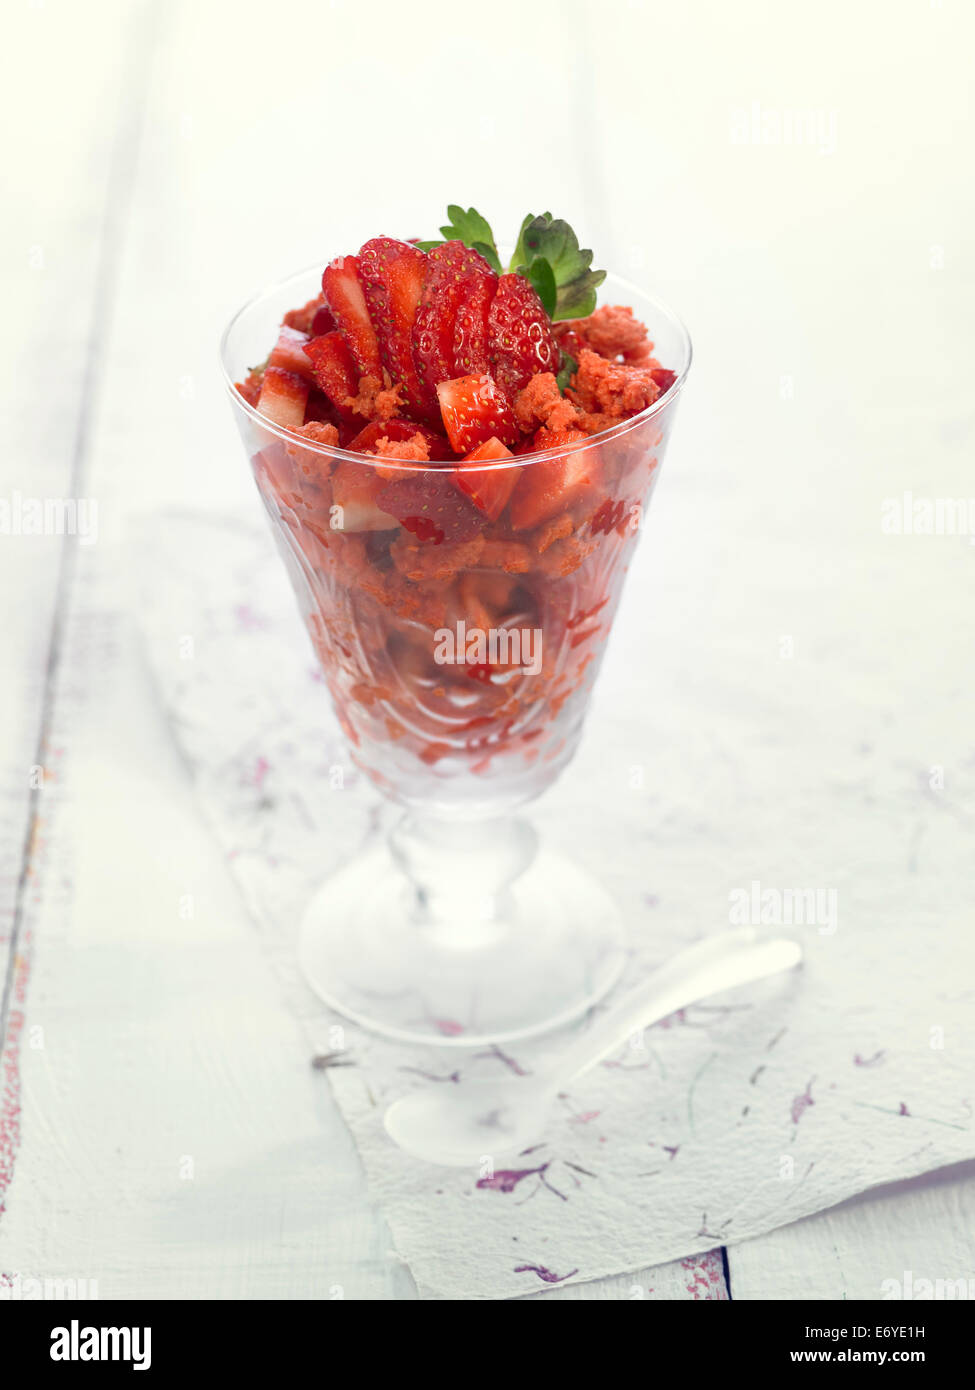 Strawberry fruit salad with tomato granita Stock Photo